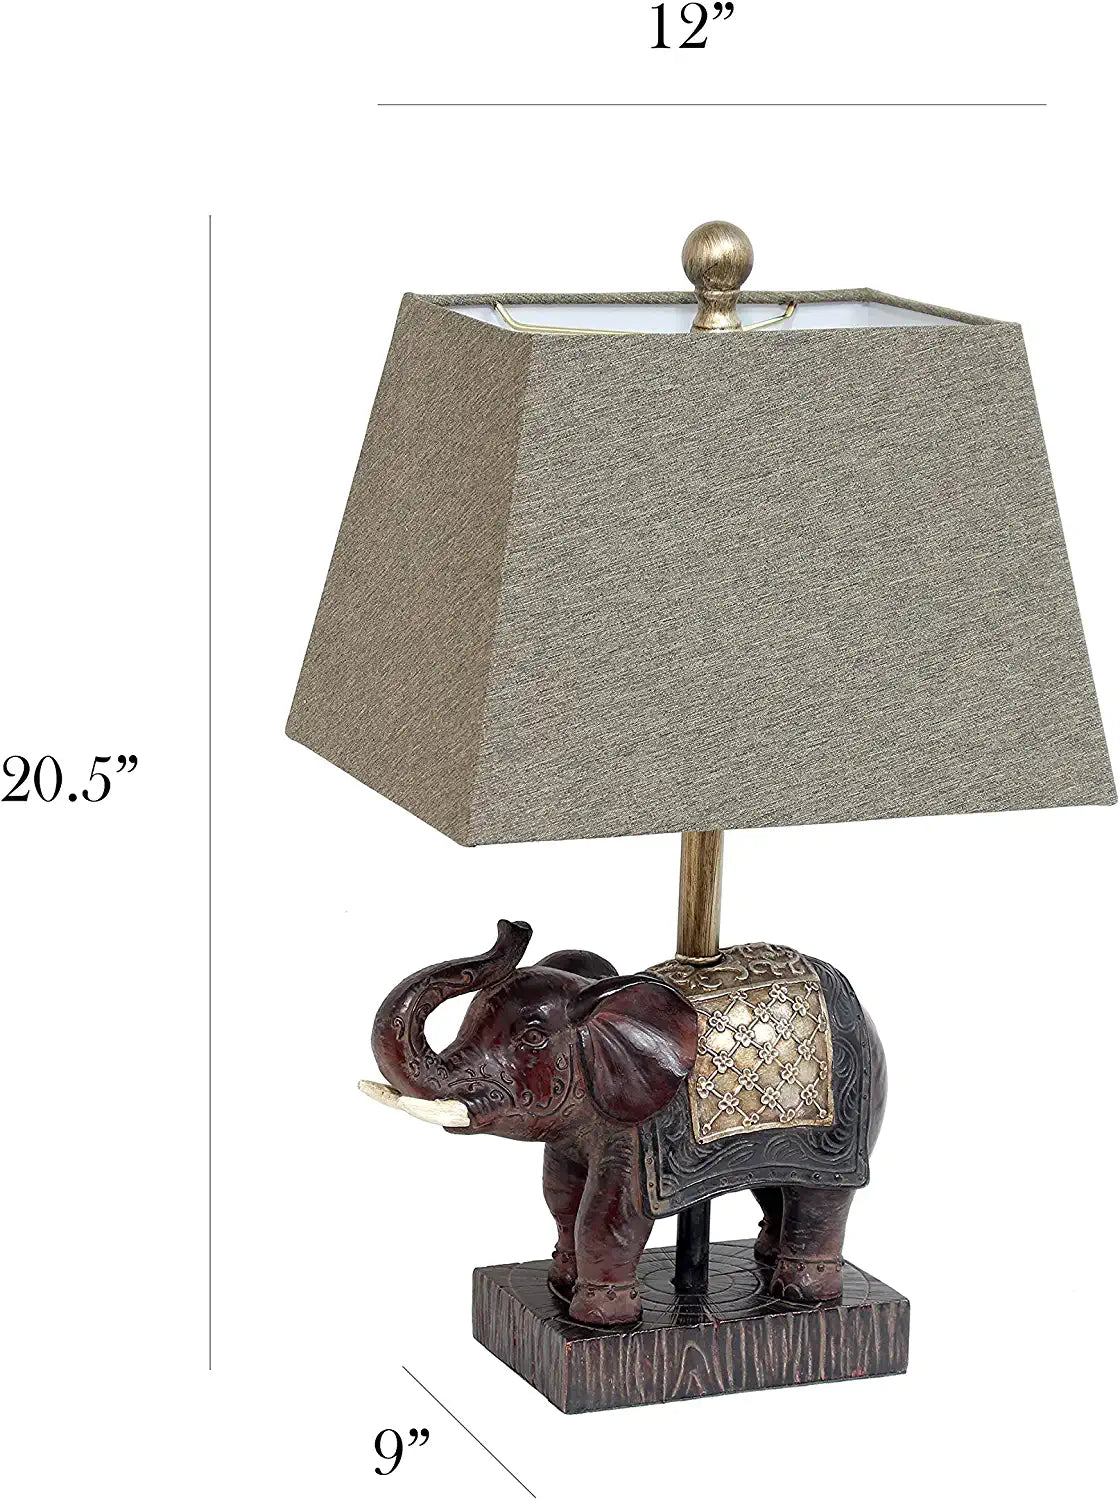 Elegant Designs LT3305-BWN Festive Elephant Table Lamp, Brown